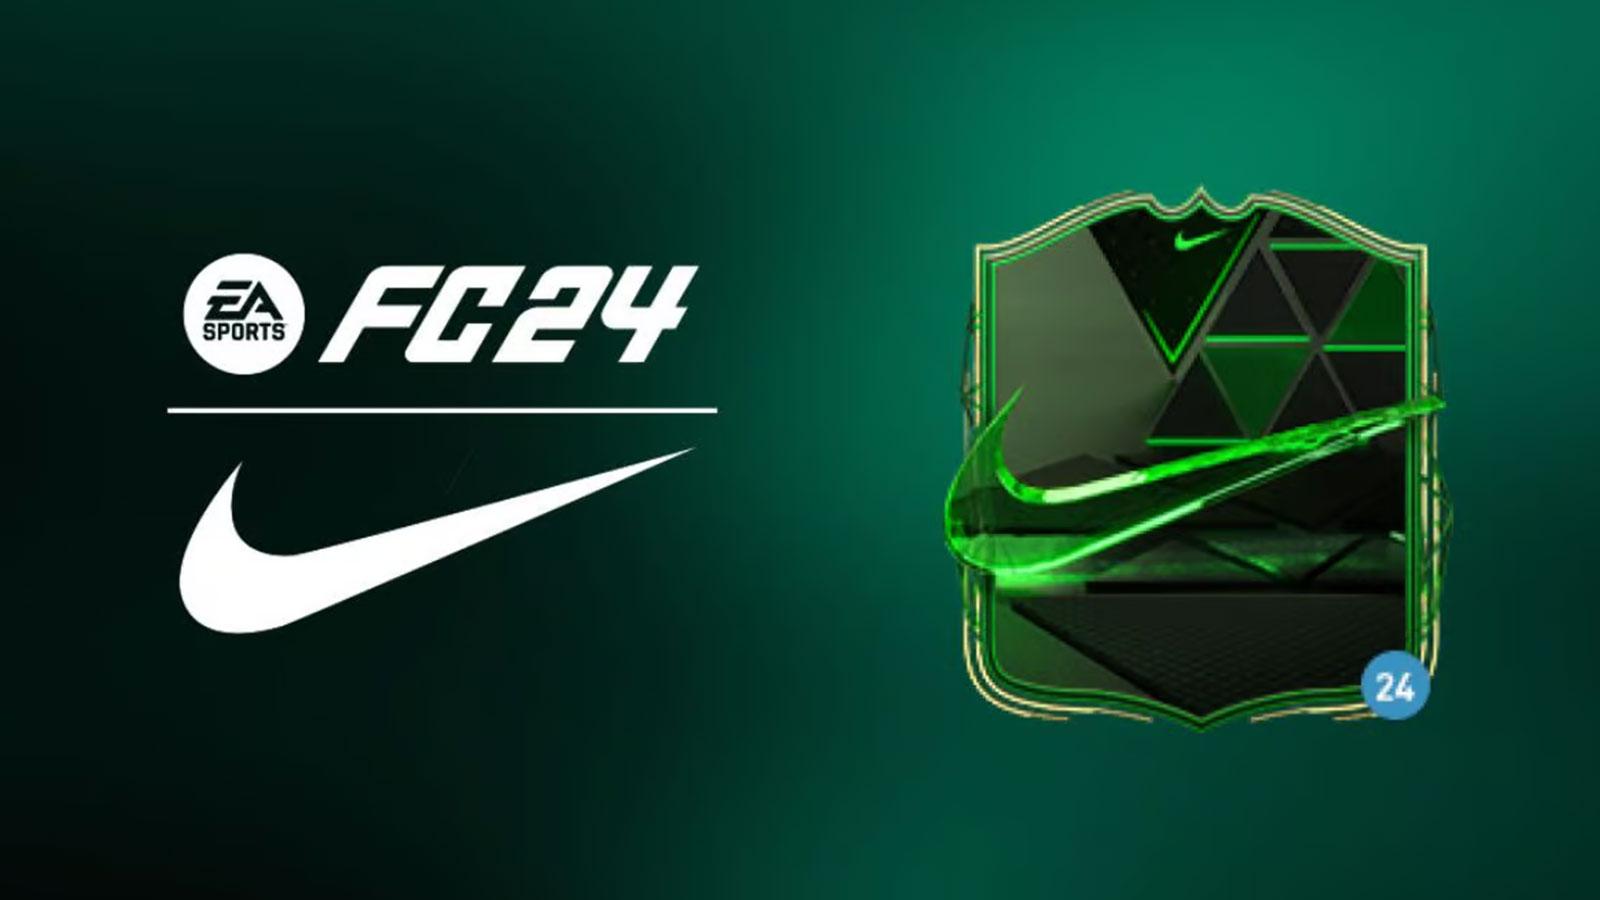 Promotion Nike dans EA SPORTS FC 24